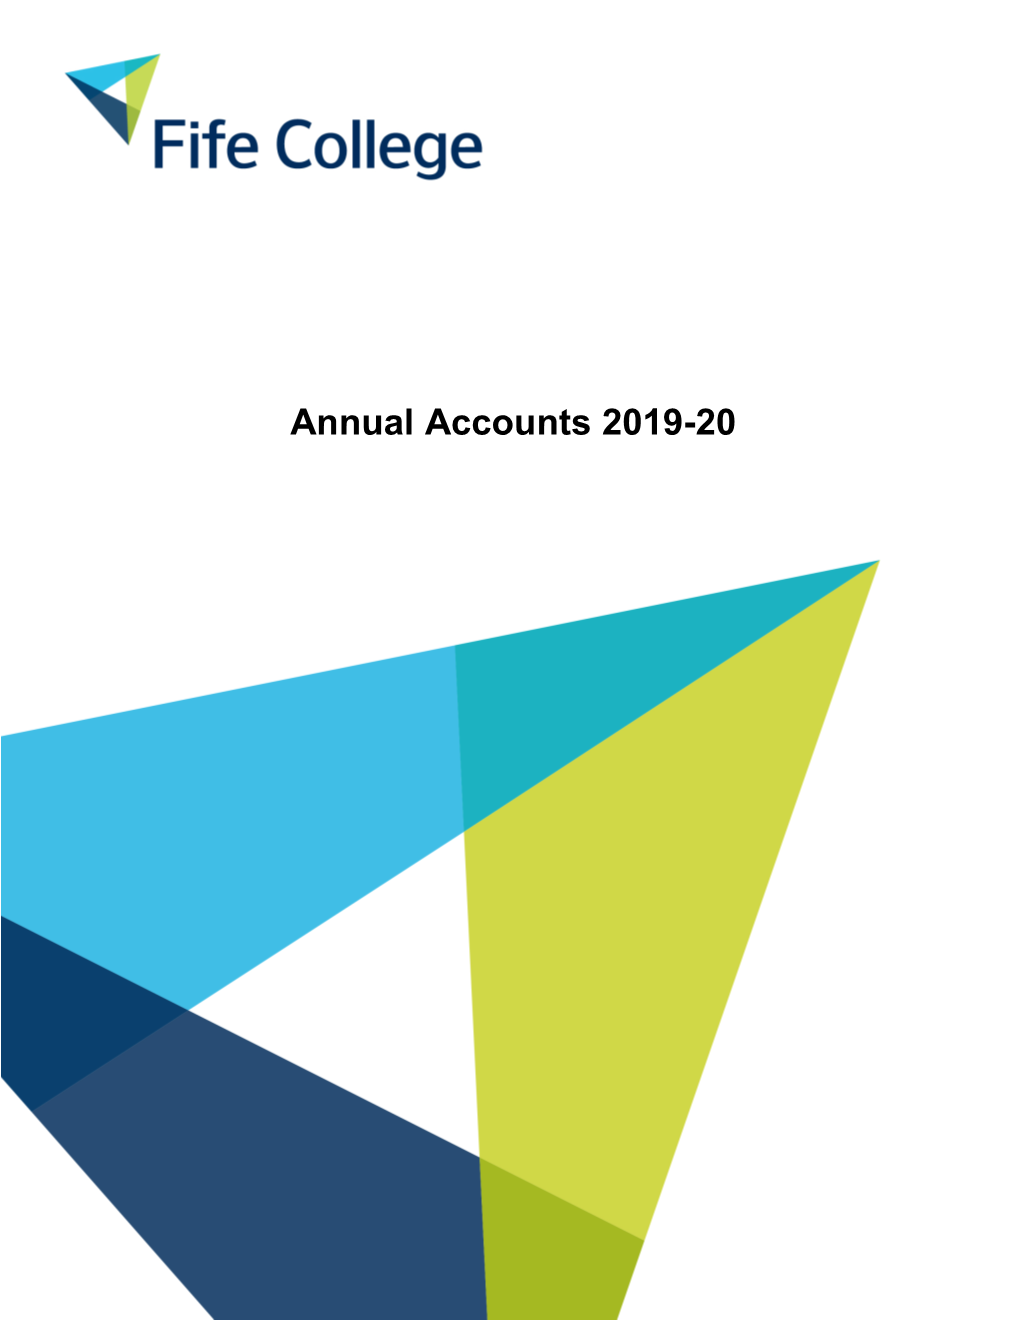 Fife College Annual Accounts 2019-20